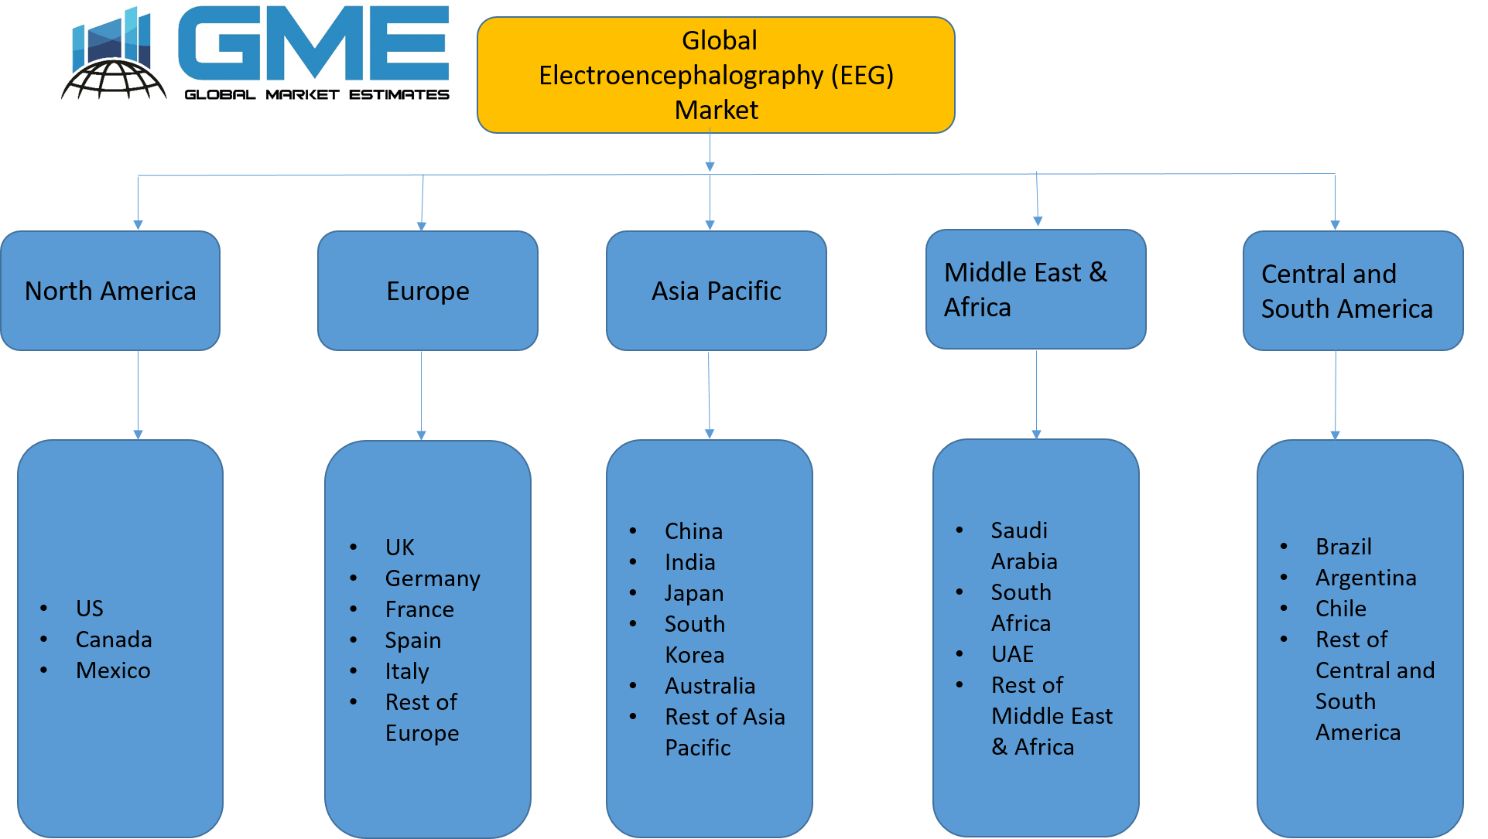 Global Electroencephalography (EEG) Market - Regional Analysis